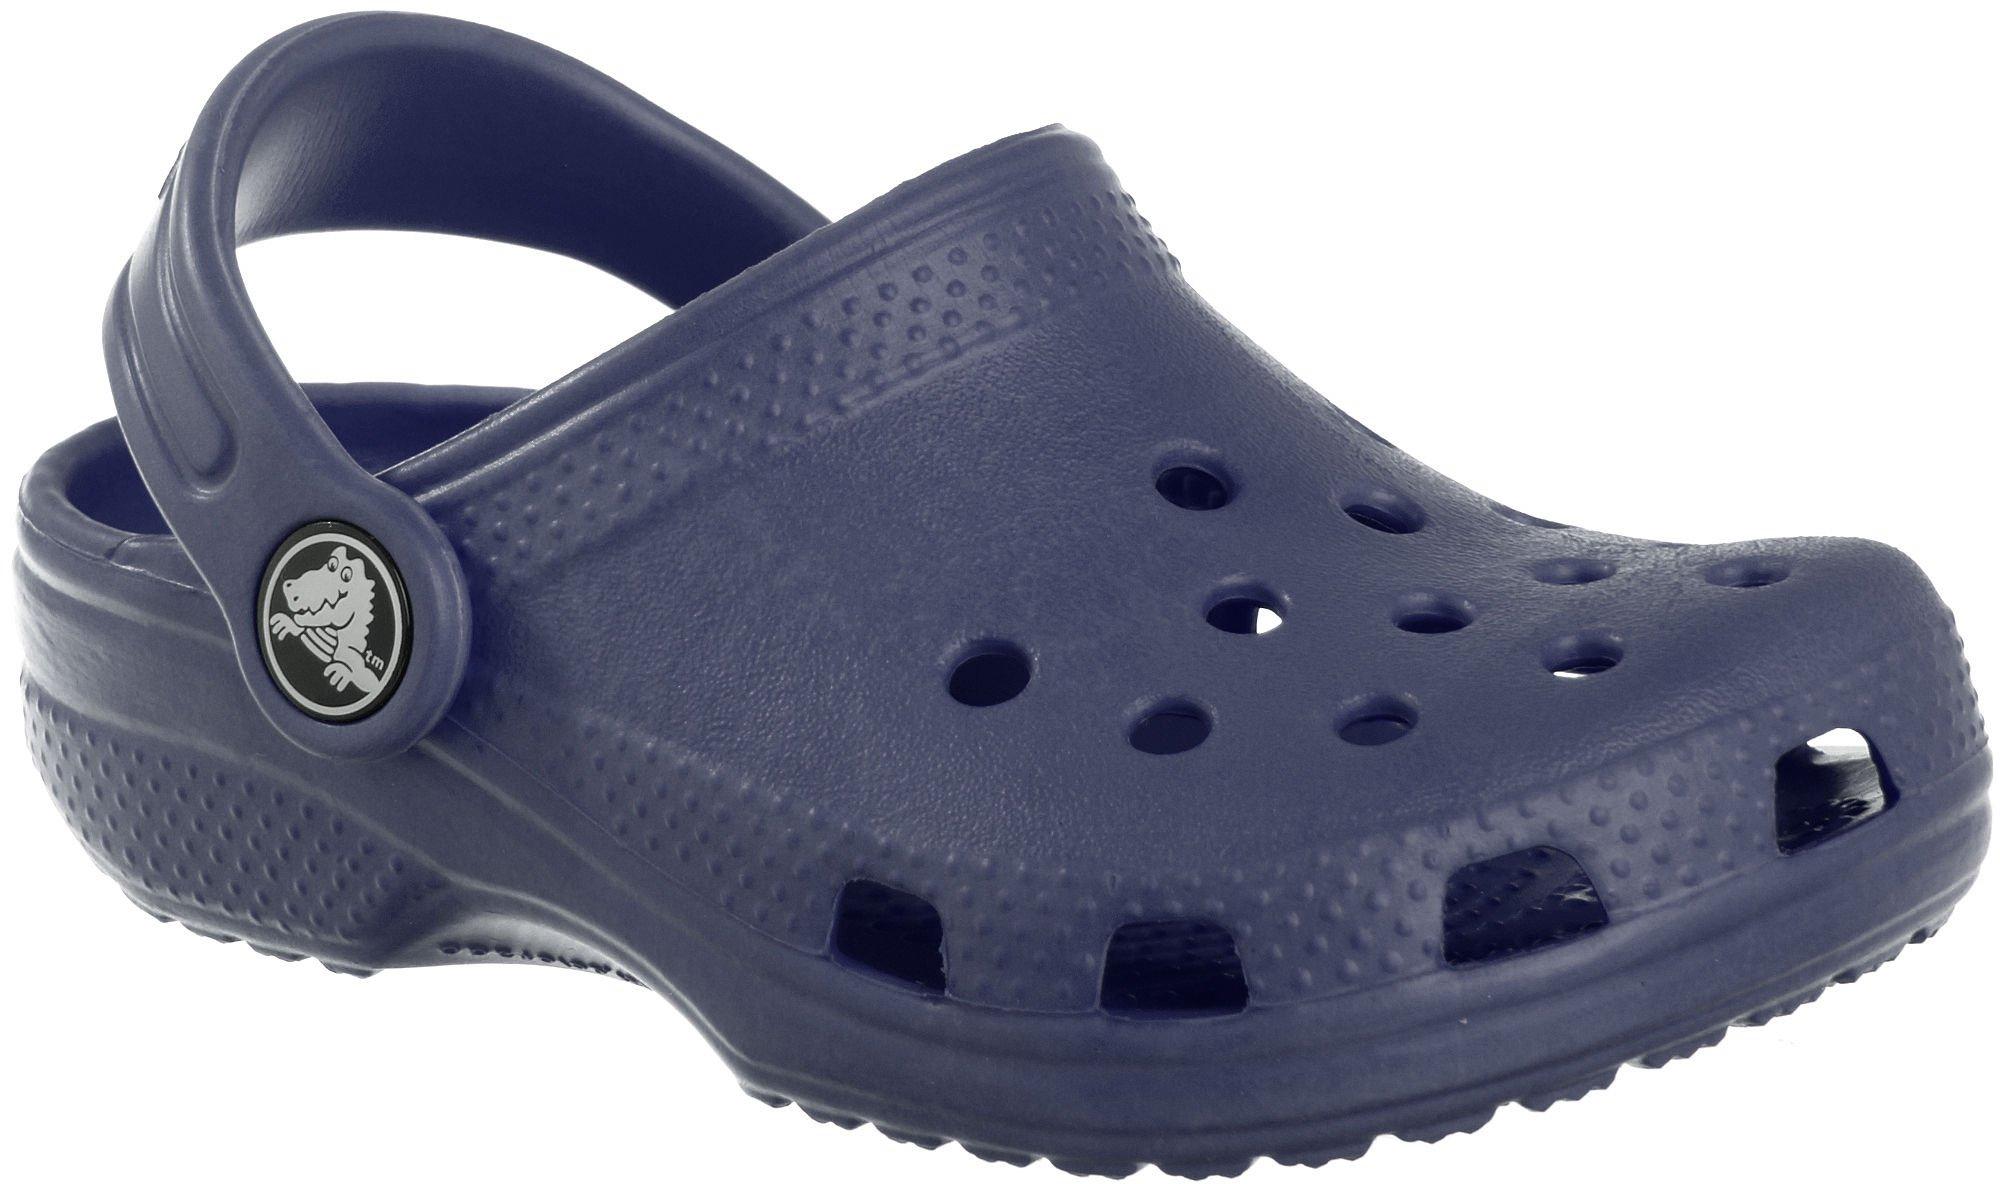 crocs sandals toddler boy